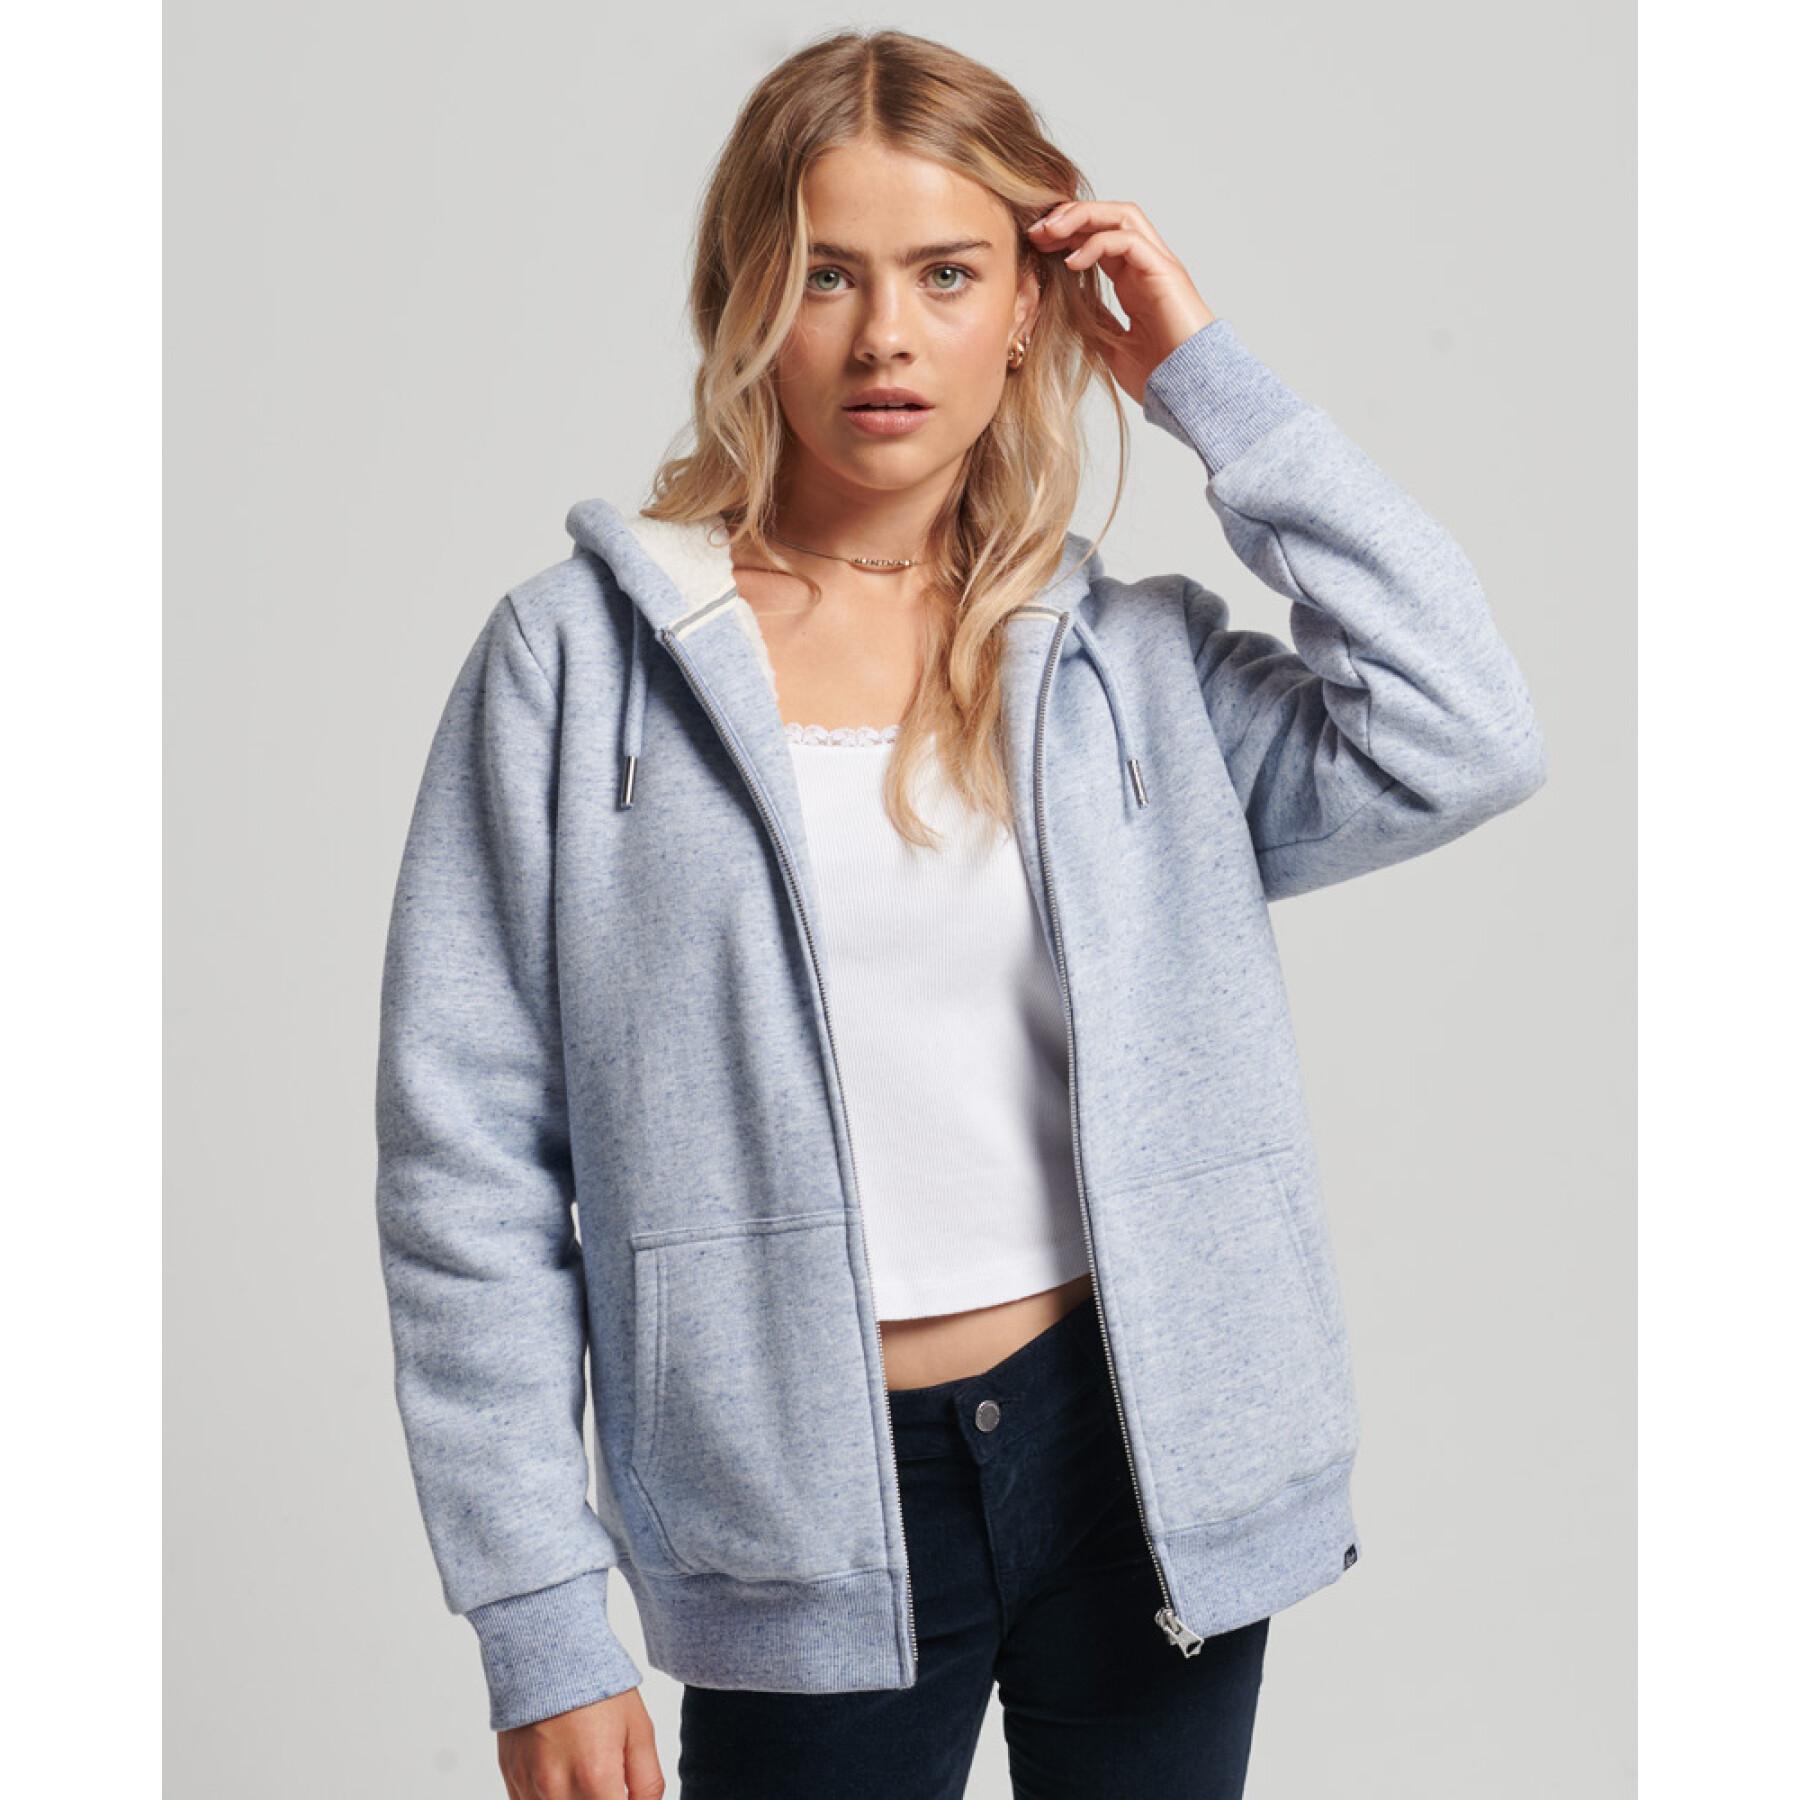 Women's zip-up hooded sweatshirt with fur lining Superdry